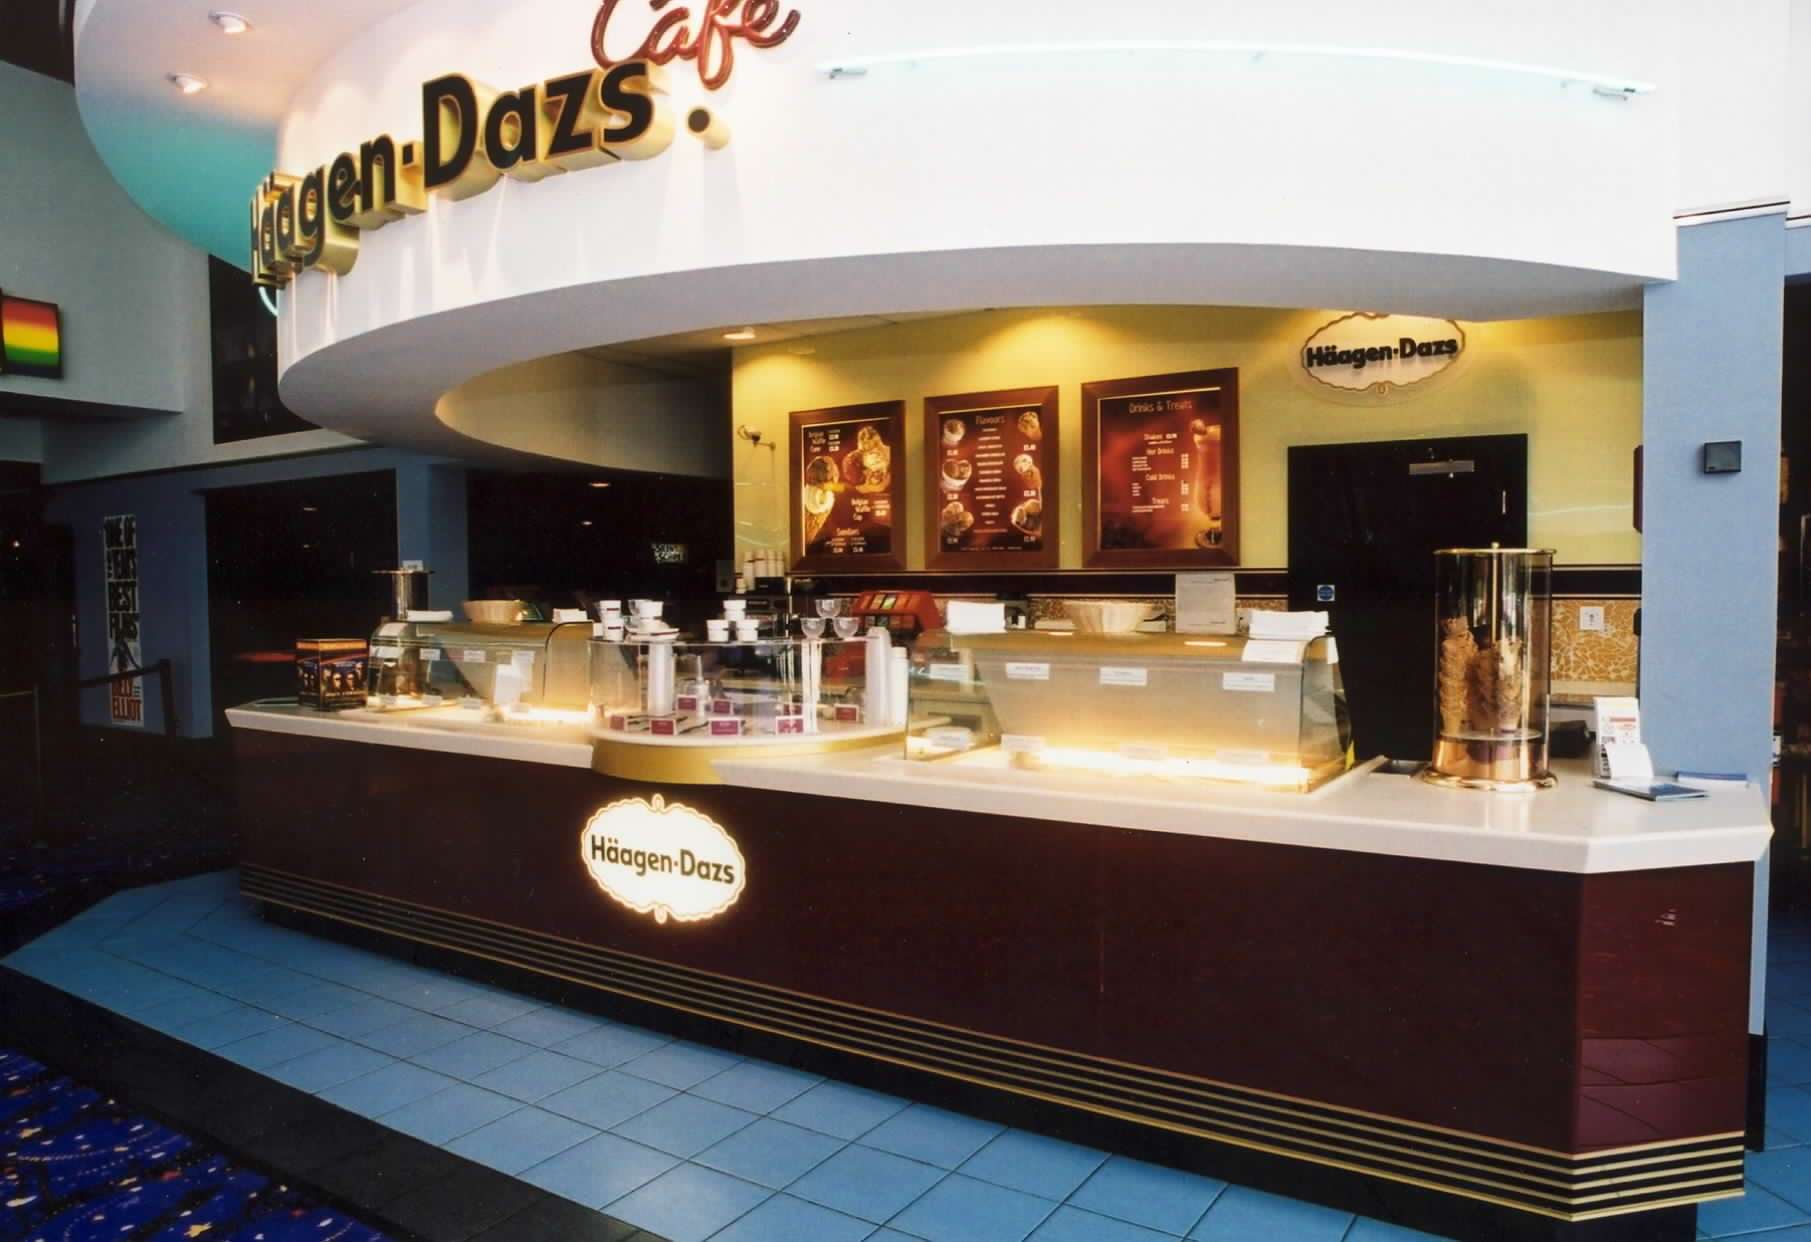 American ice cream brand Häagen-Dazs had a cafe at the site